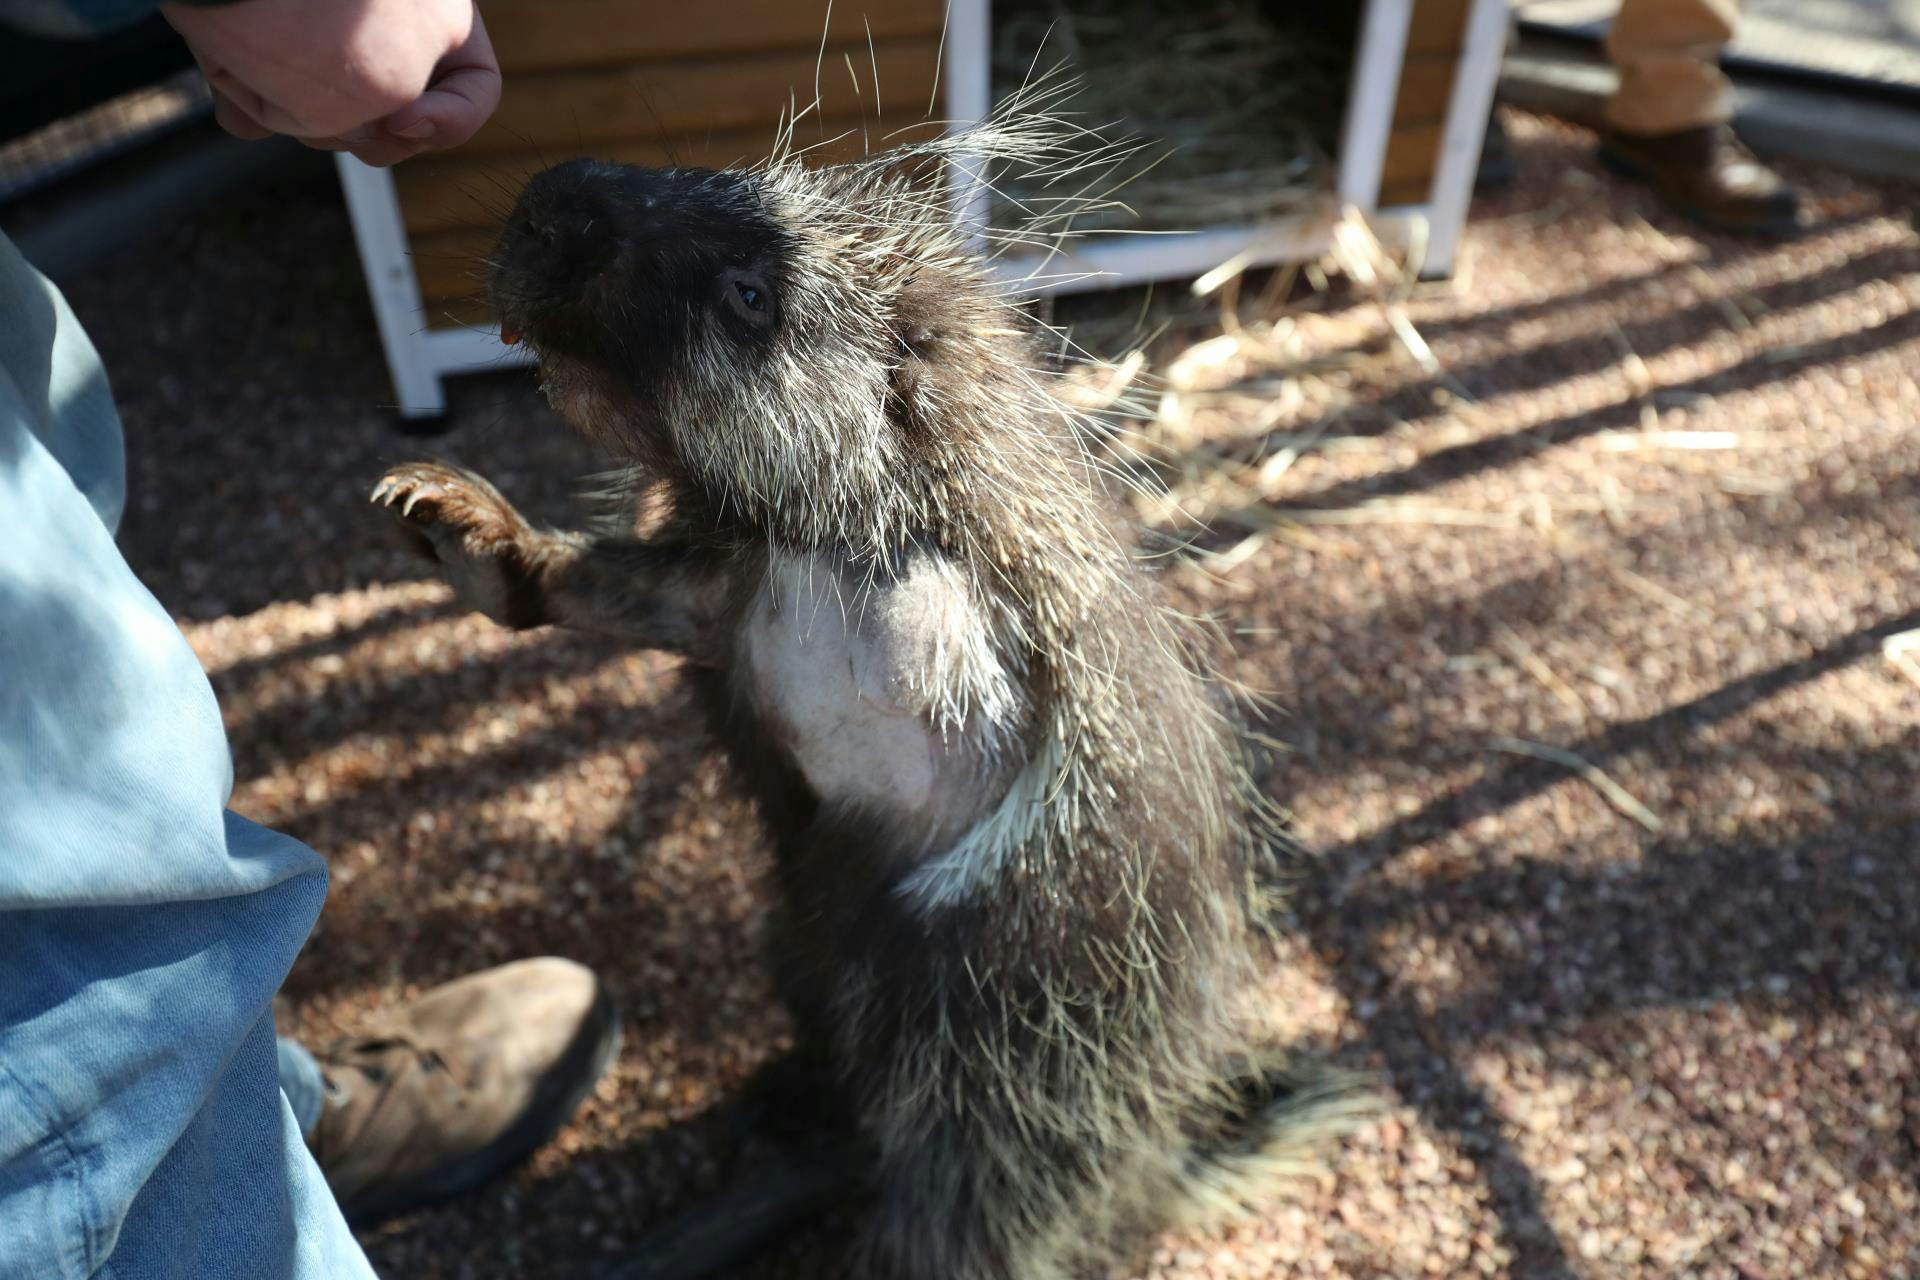 Quill “Porky” Smith, the 3-legged porcupine (Photo courtesy of Amarillo Zoo).